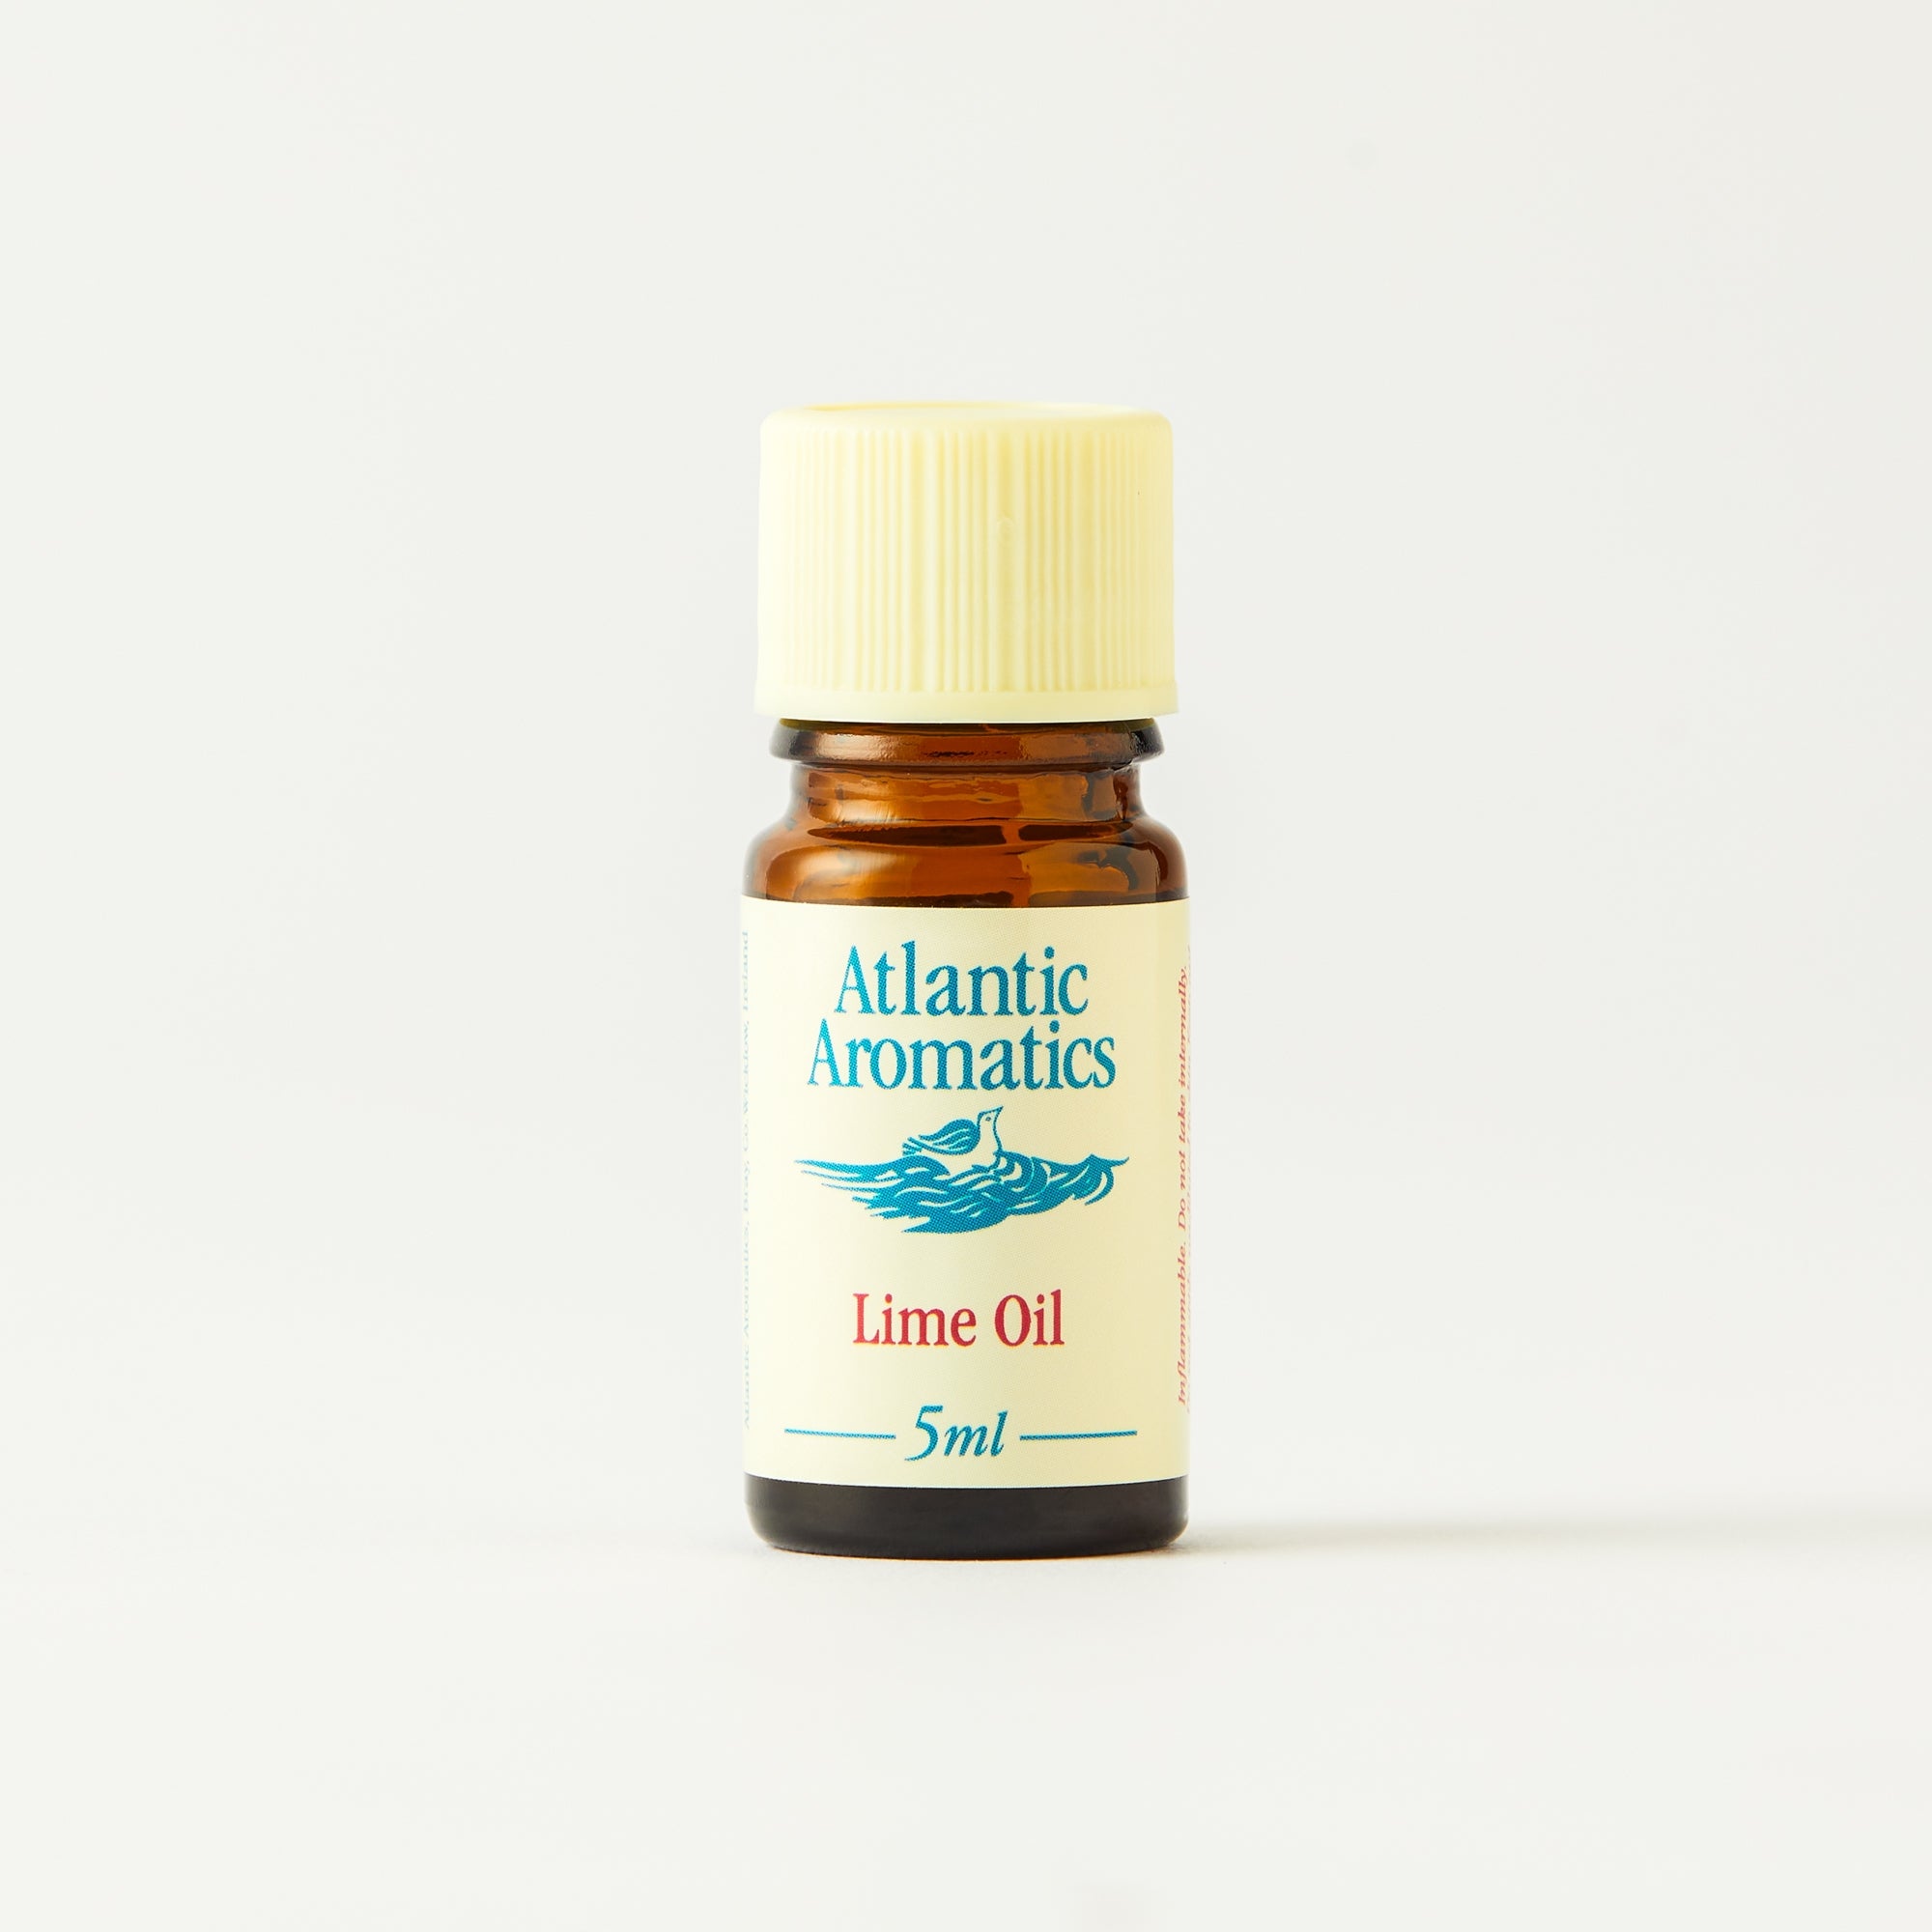 Atlantic Aromatics Lime Oil